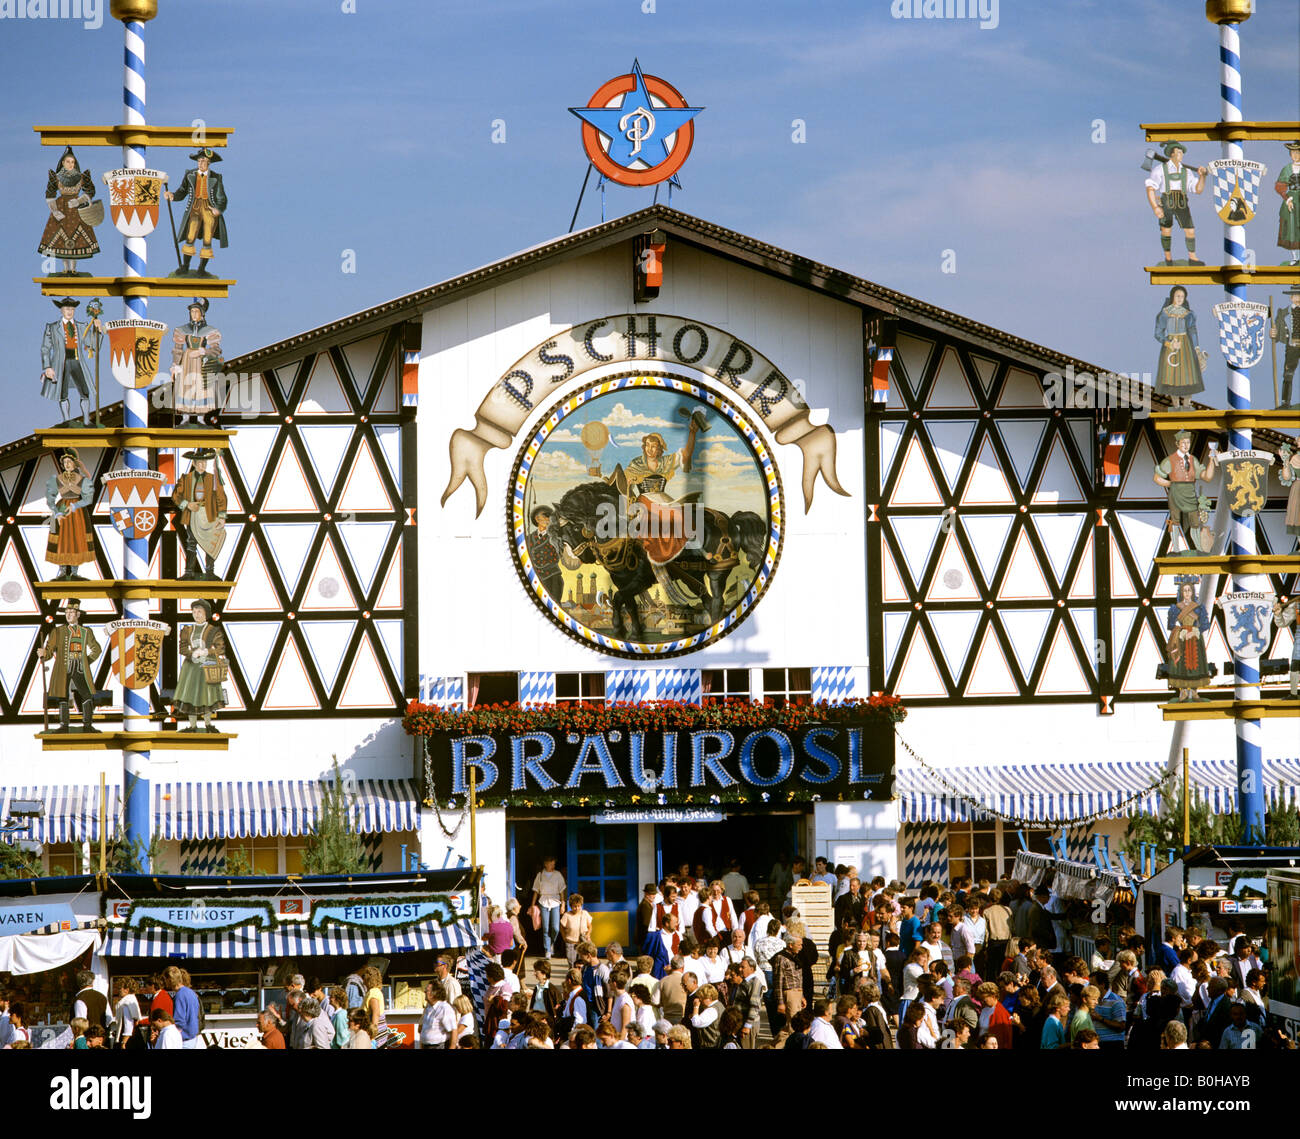 Oktoberfest, Octoberfest Munich beer festival, Braeurosl pavilion tent, Theresienwiese, Munich, Bavaria, Germany Stock Photo